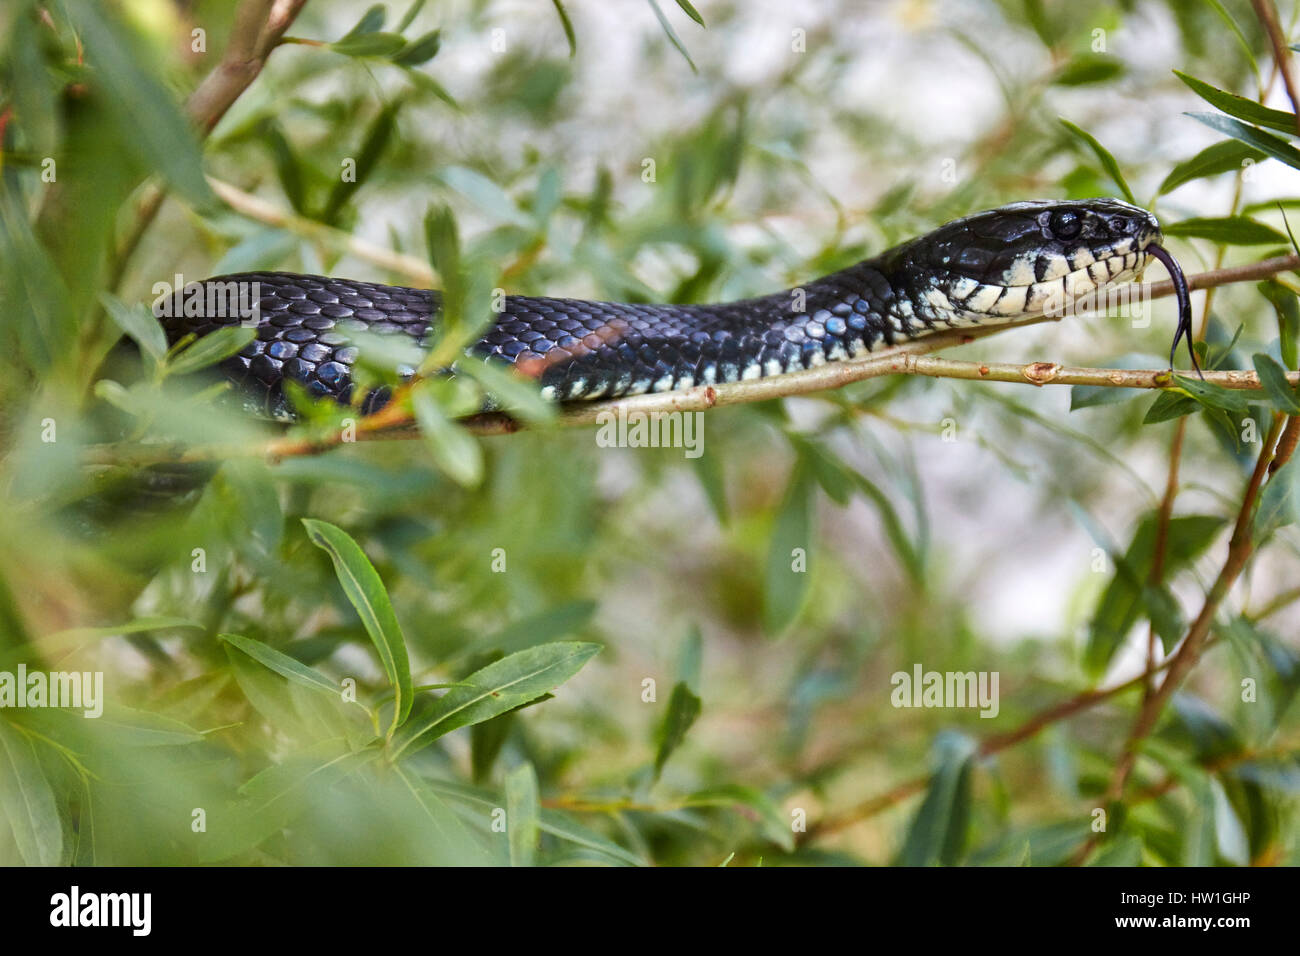 Grass snake in tree Stock Photo